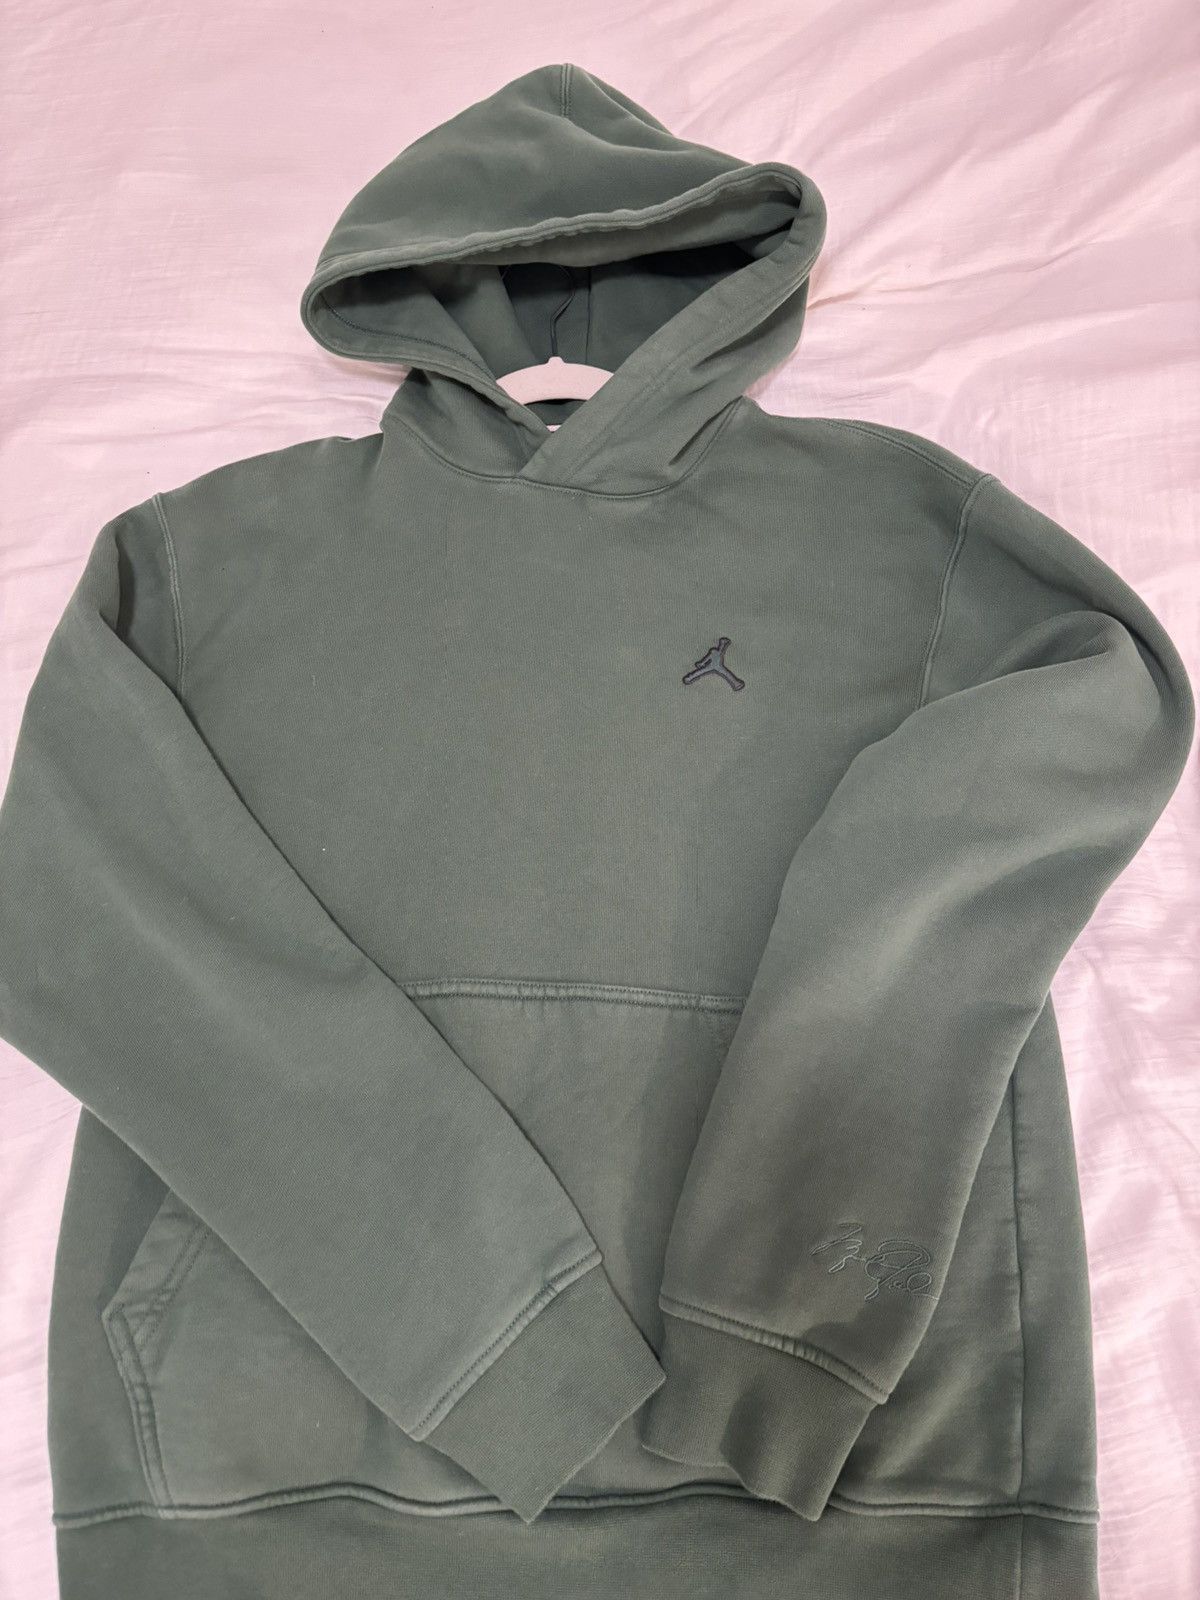 Jordan Brand Jordan Sweatshirt Size US S / EU 44-46 / 1 - 1 Preview